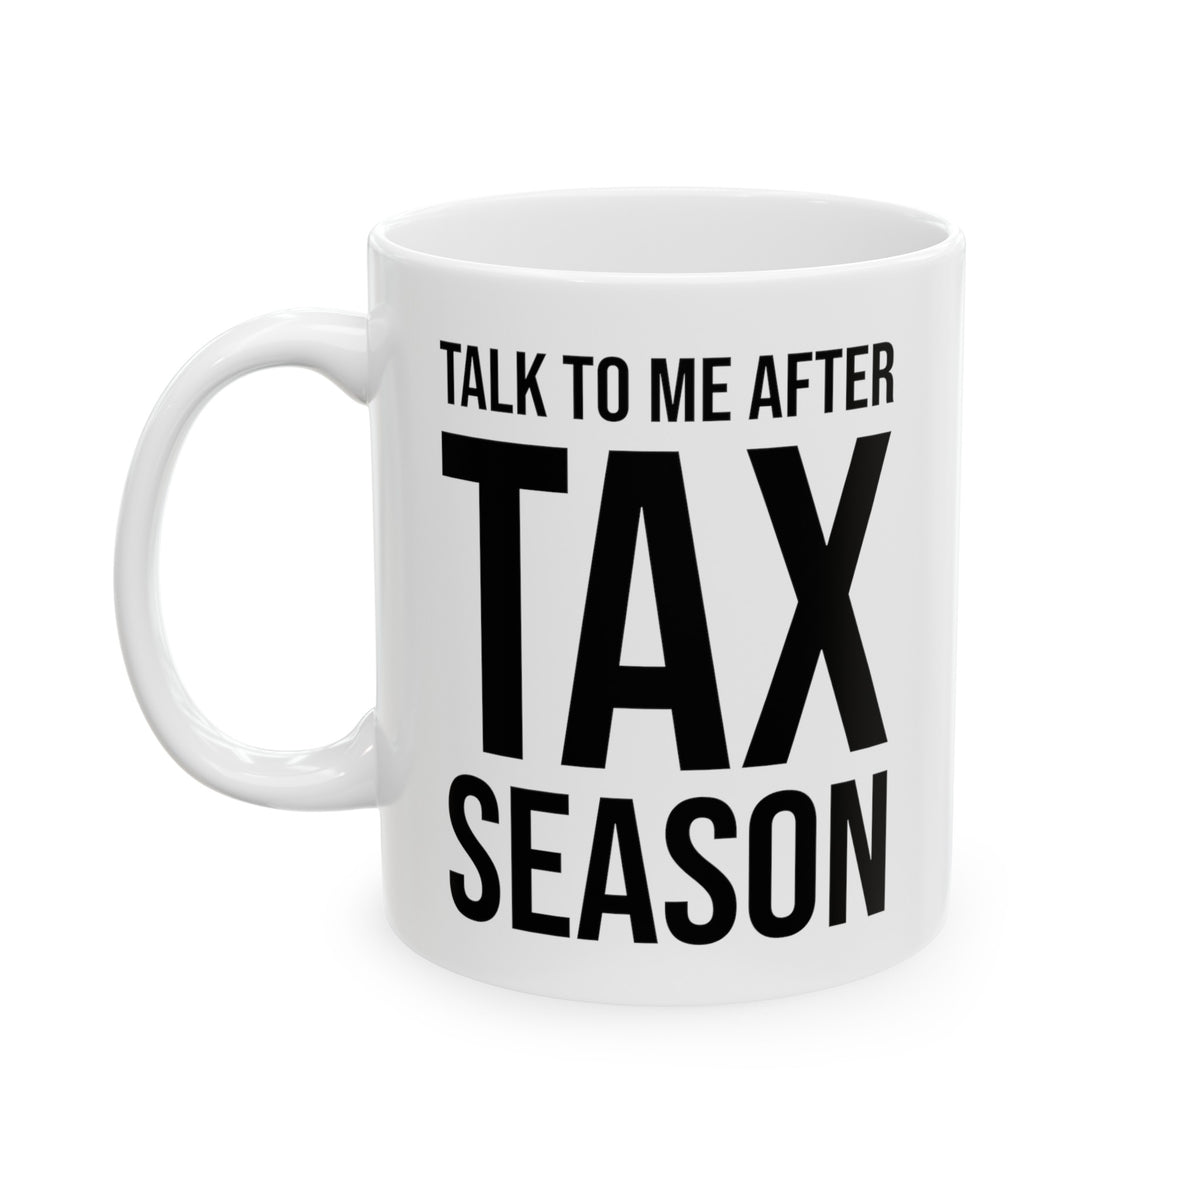 Funny Tax Coffee Mug - Talk to me after tax season - Gag Gift For Tax Accountant Season Preparer